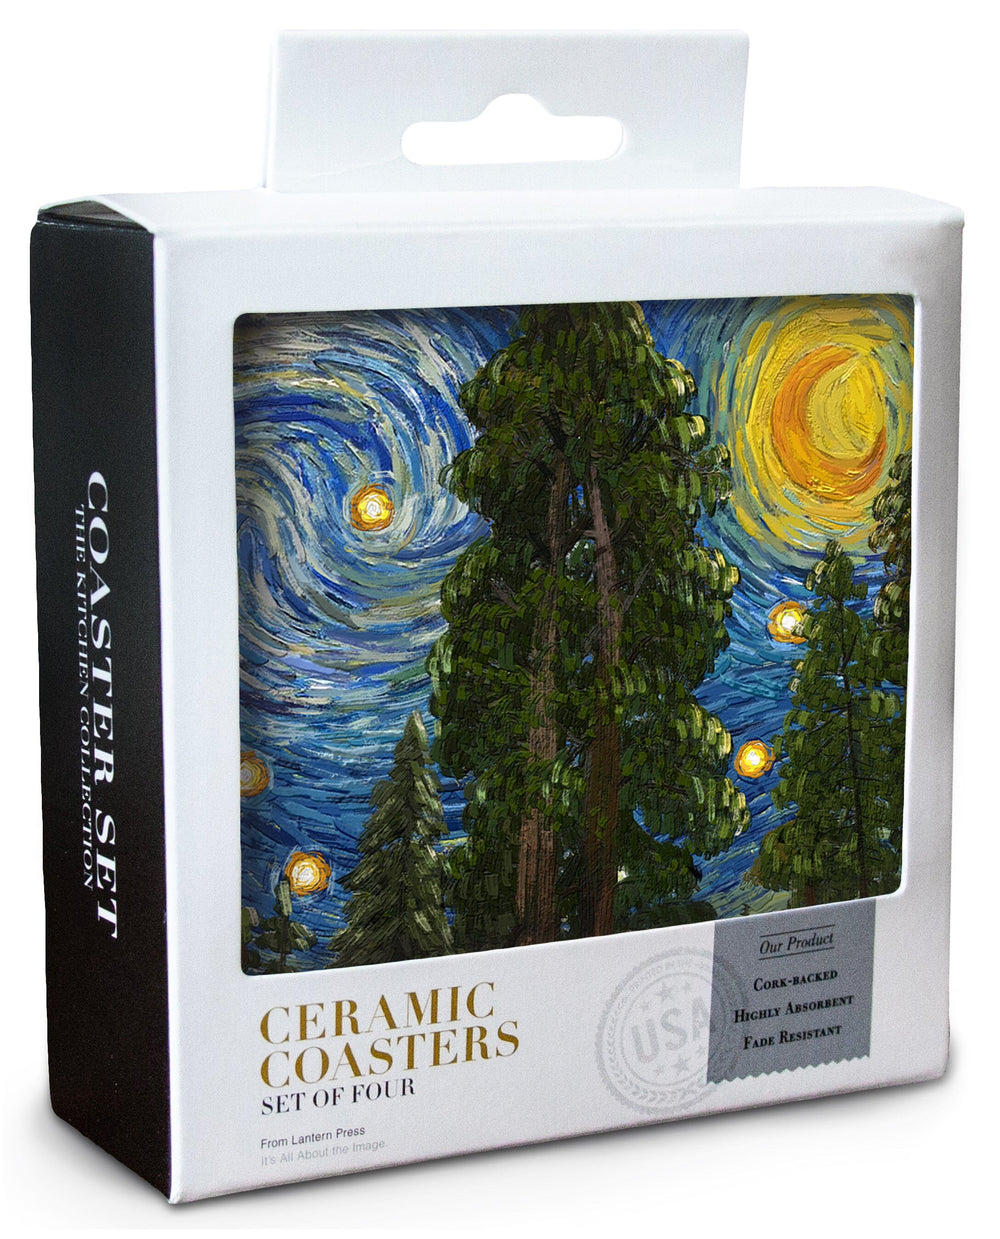 Big Sur, California, Starry Night National Park Series Coasters Lantern Press 